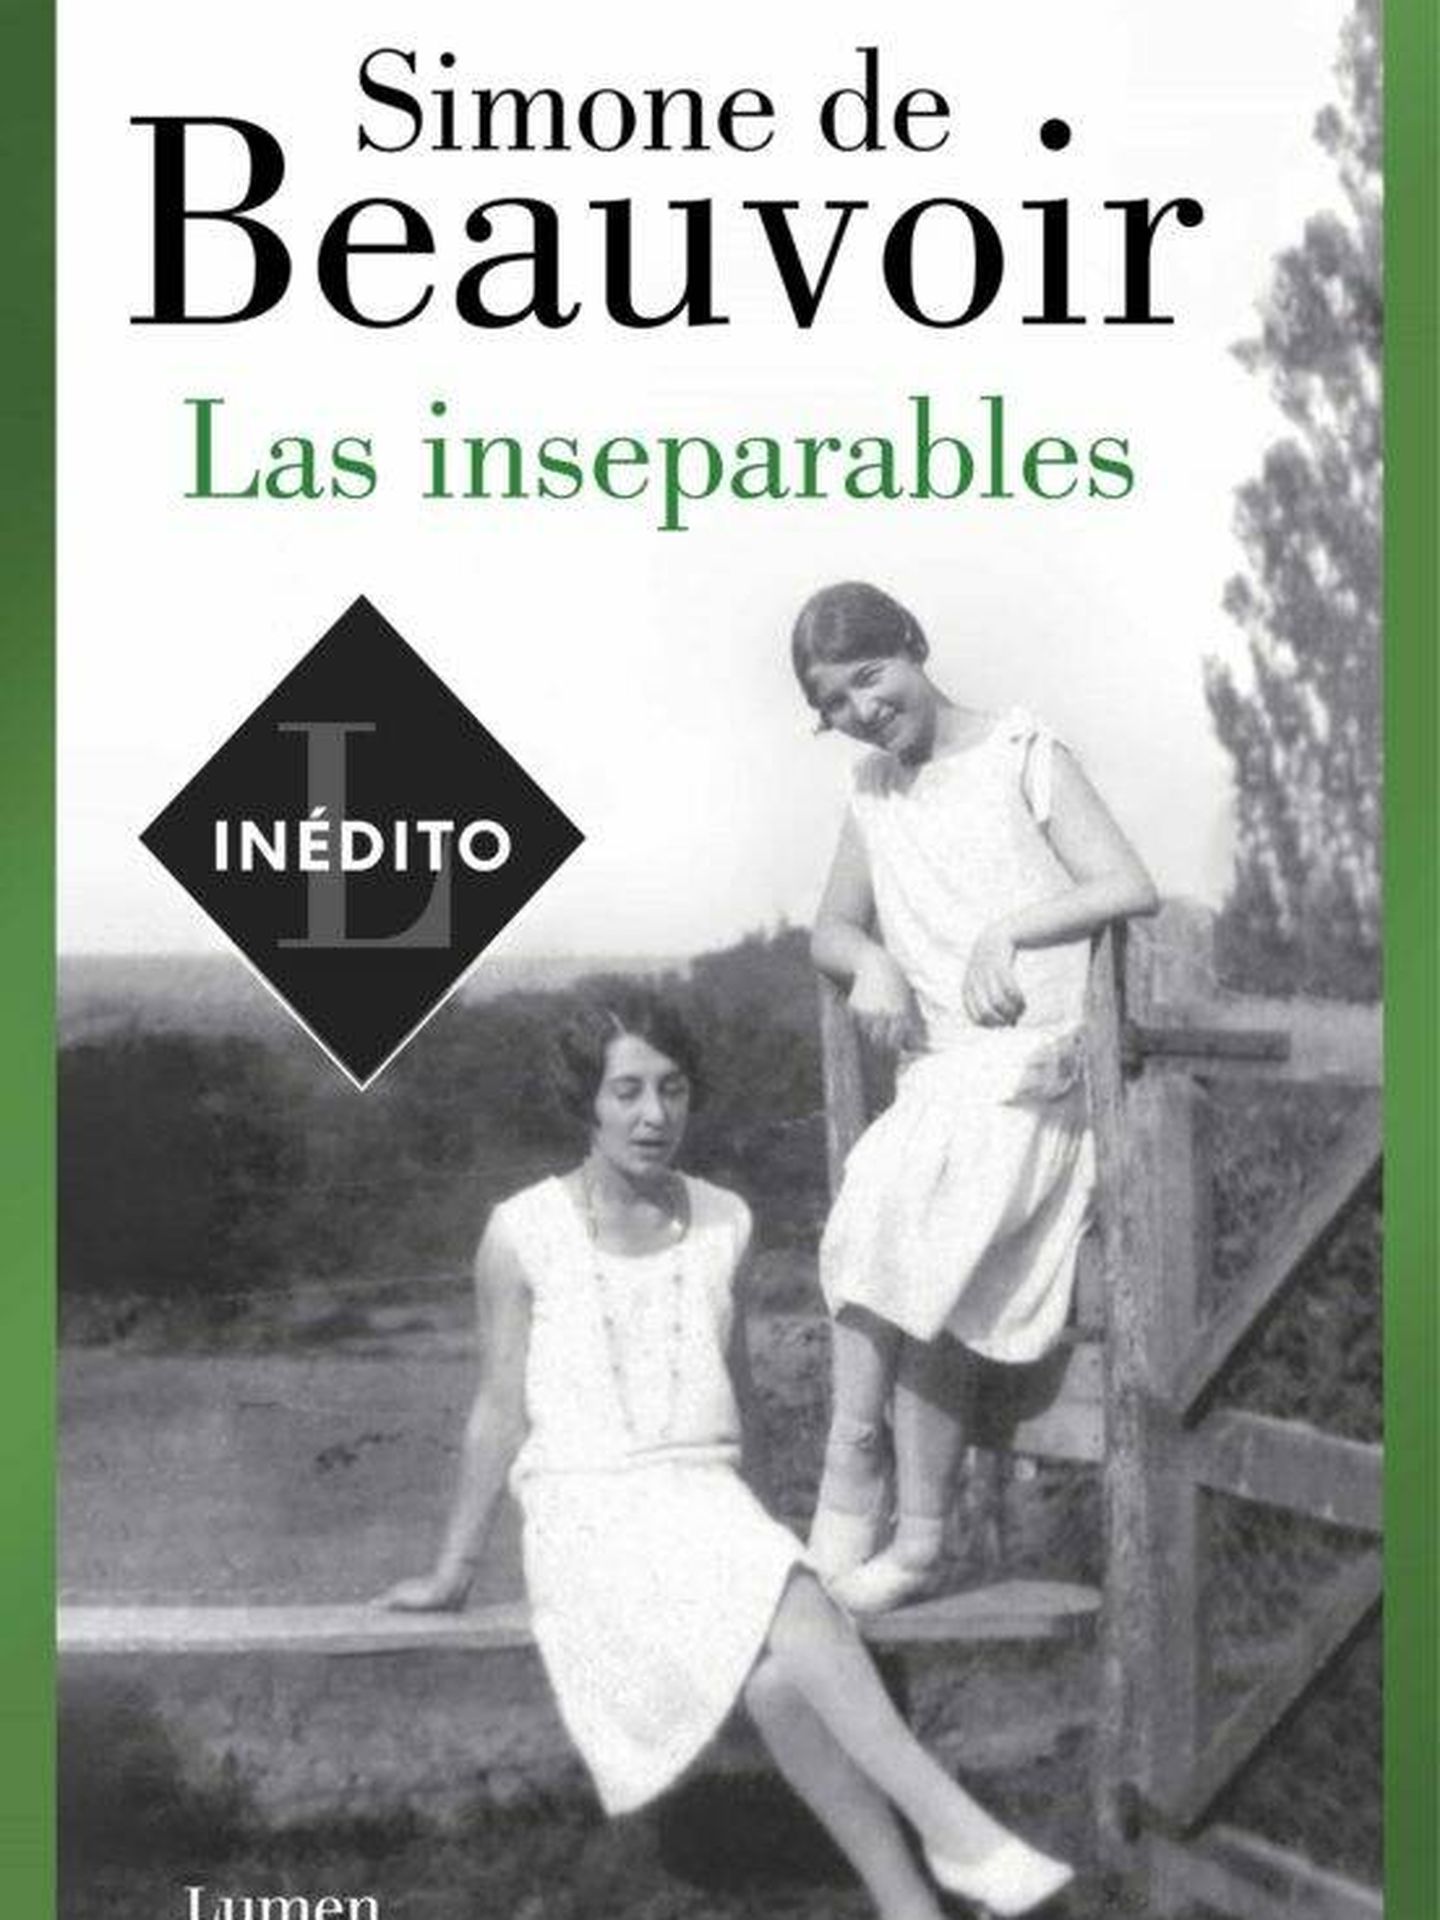 Portada de 'Las inseparables', de Simone de Beauvoir. (Lumen, 2020)